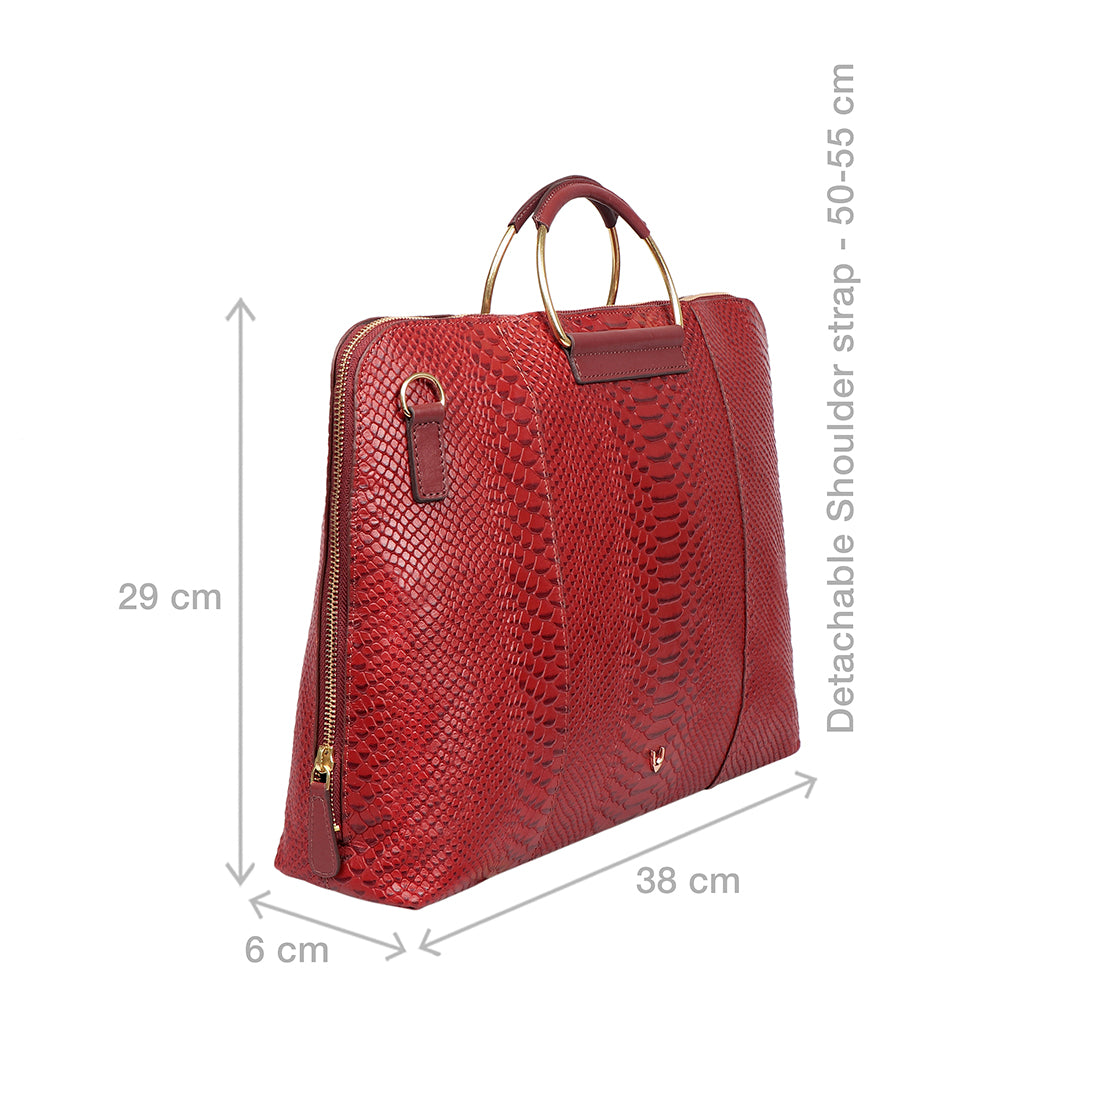 Buy Red Kester Laptop Bag Online - Hidesign